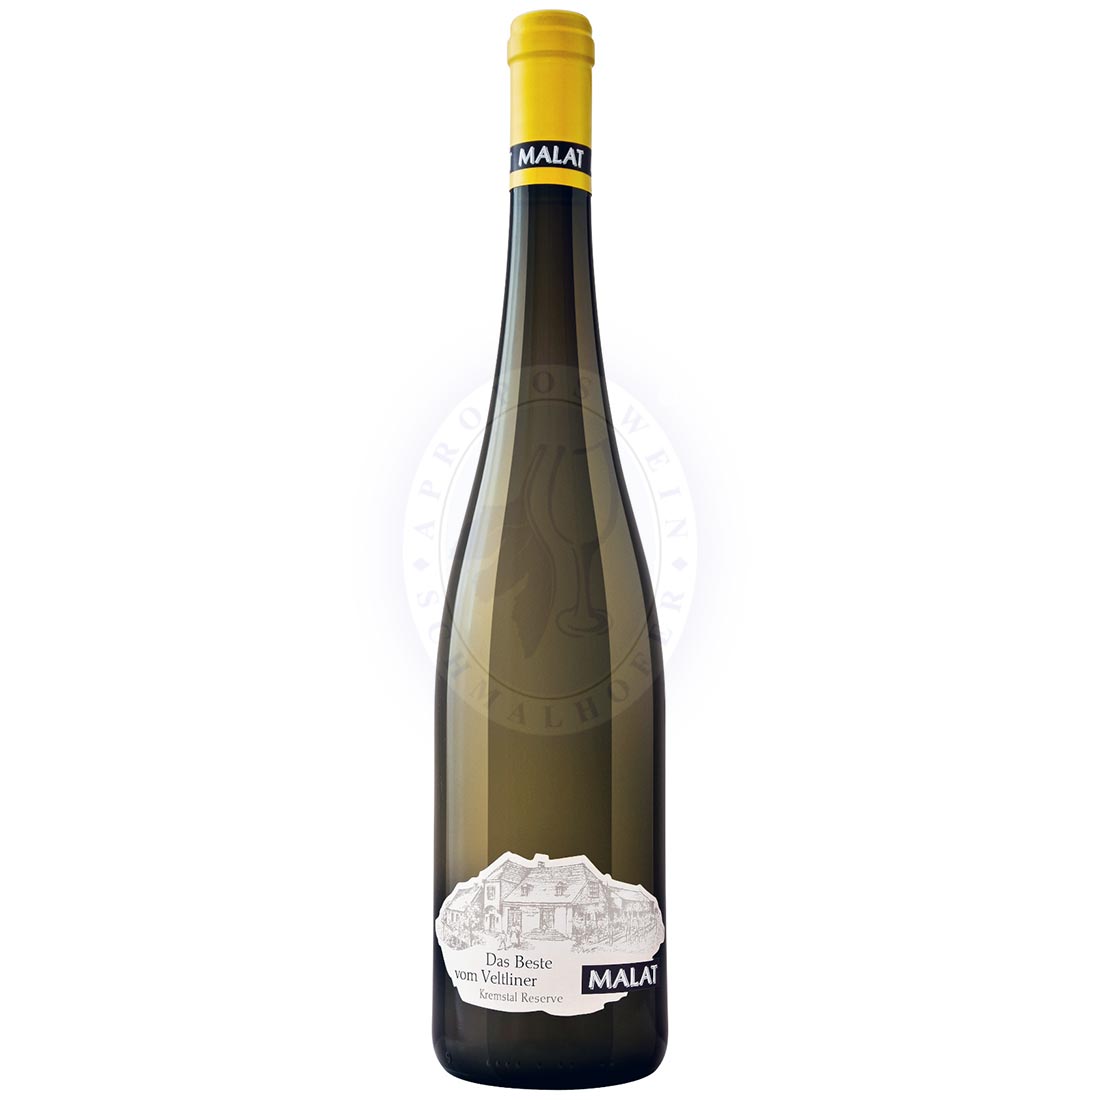 Das Beste Veltliner Reserve 2011 Weingut Malat 0,75l